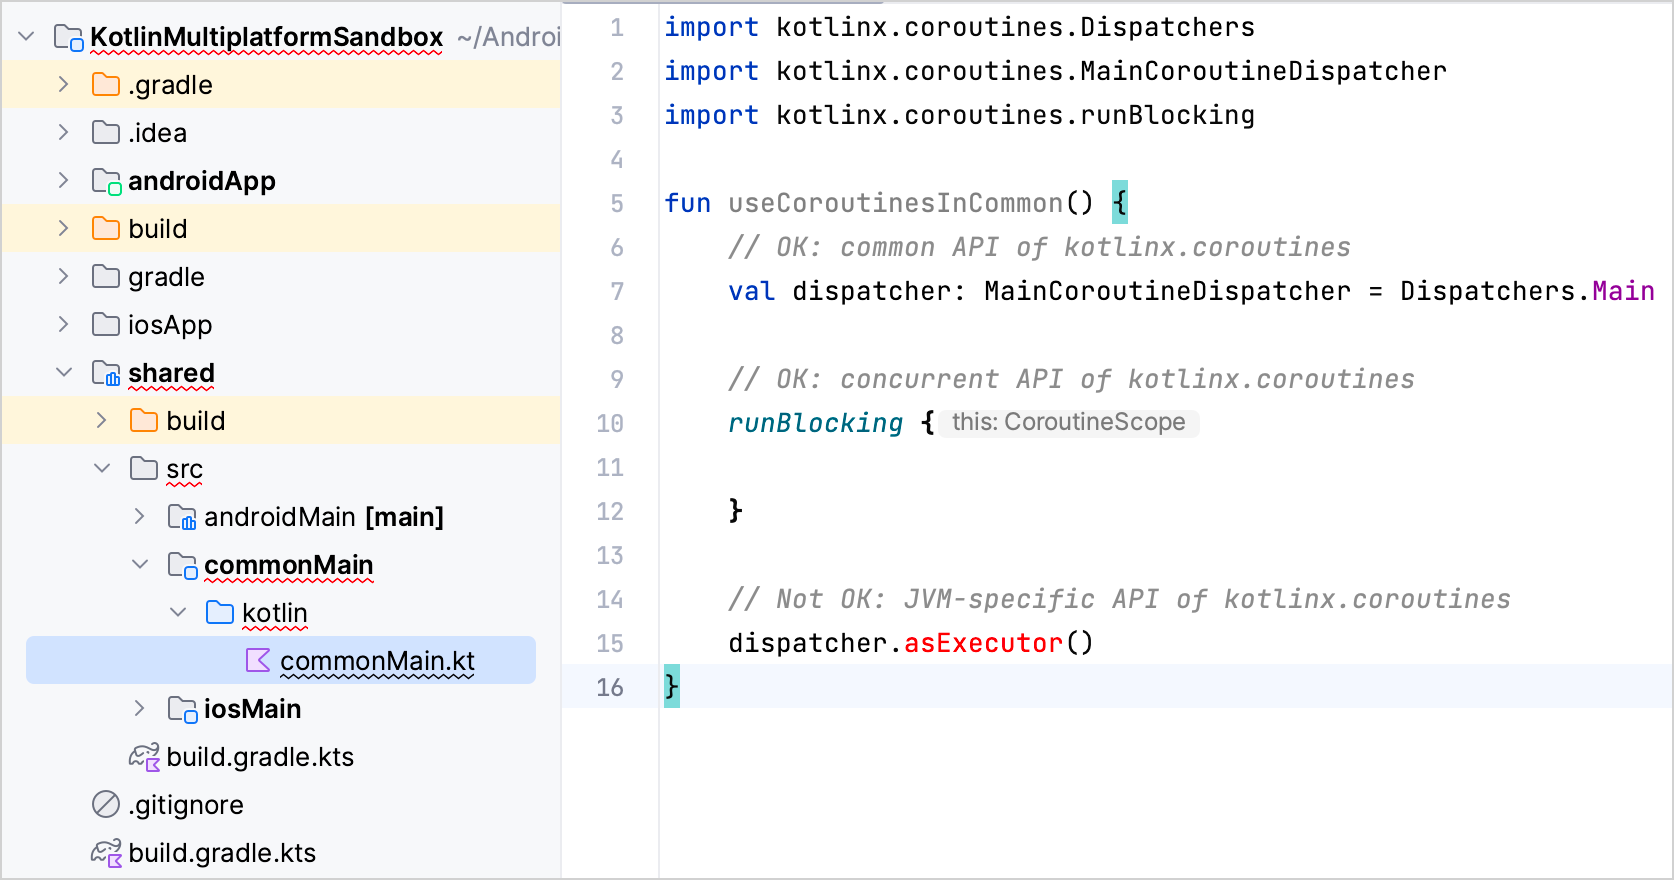 Error on JVM-specific API in common code